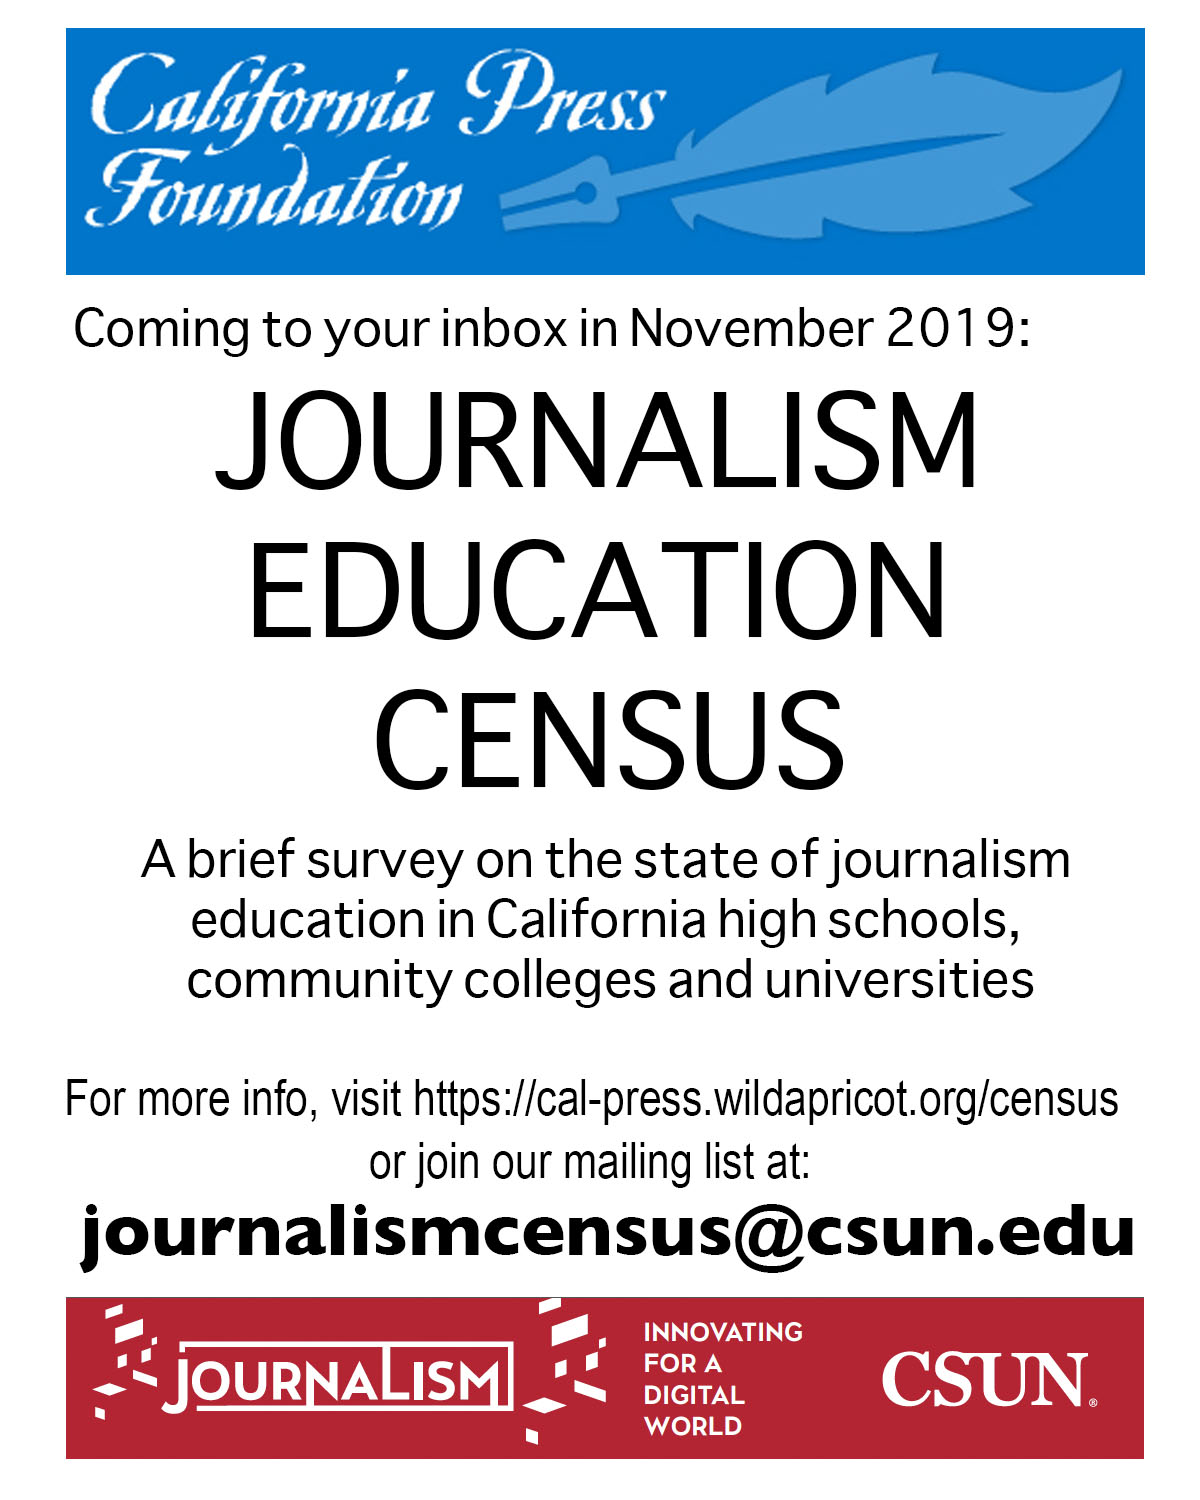 Journalism Education Census flyer